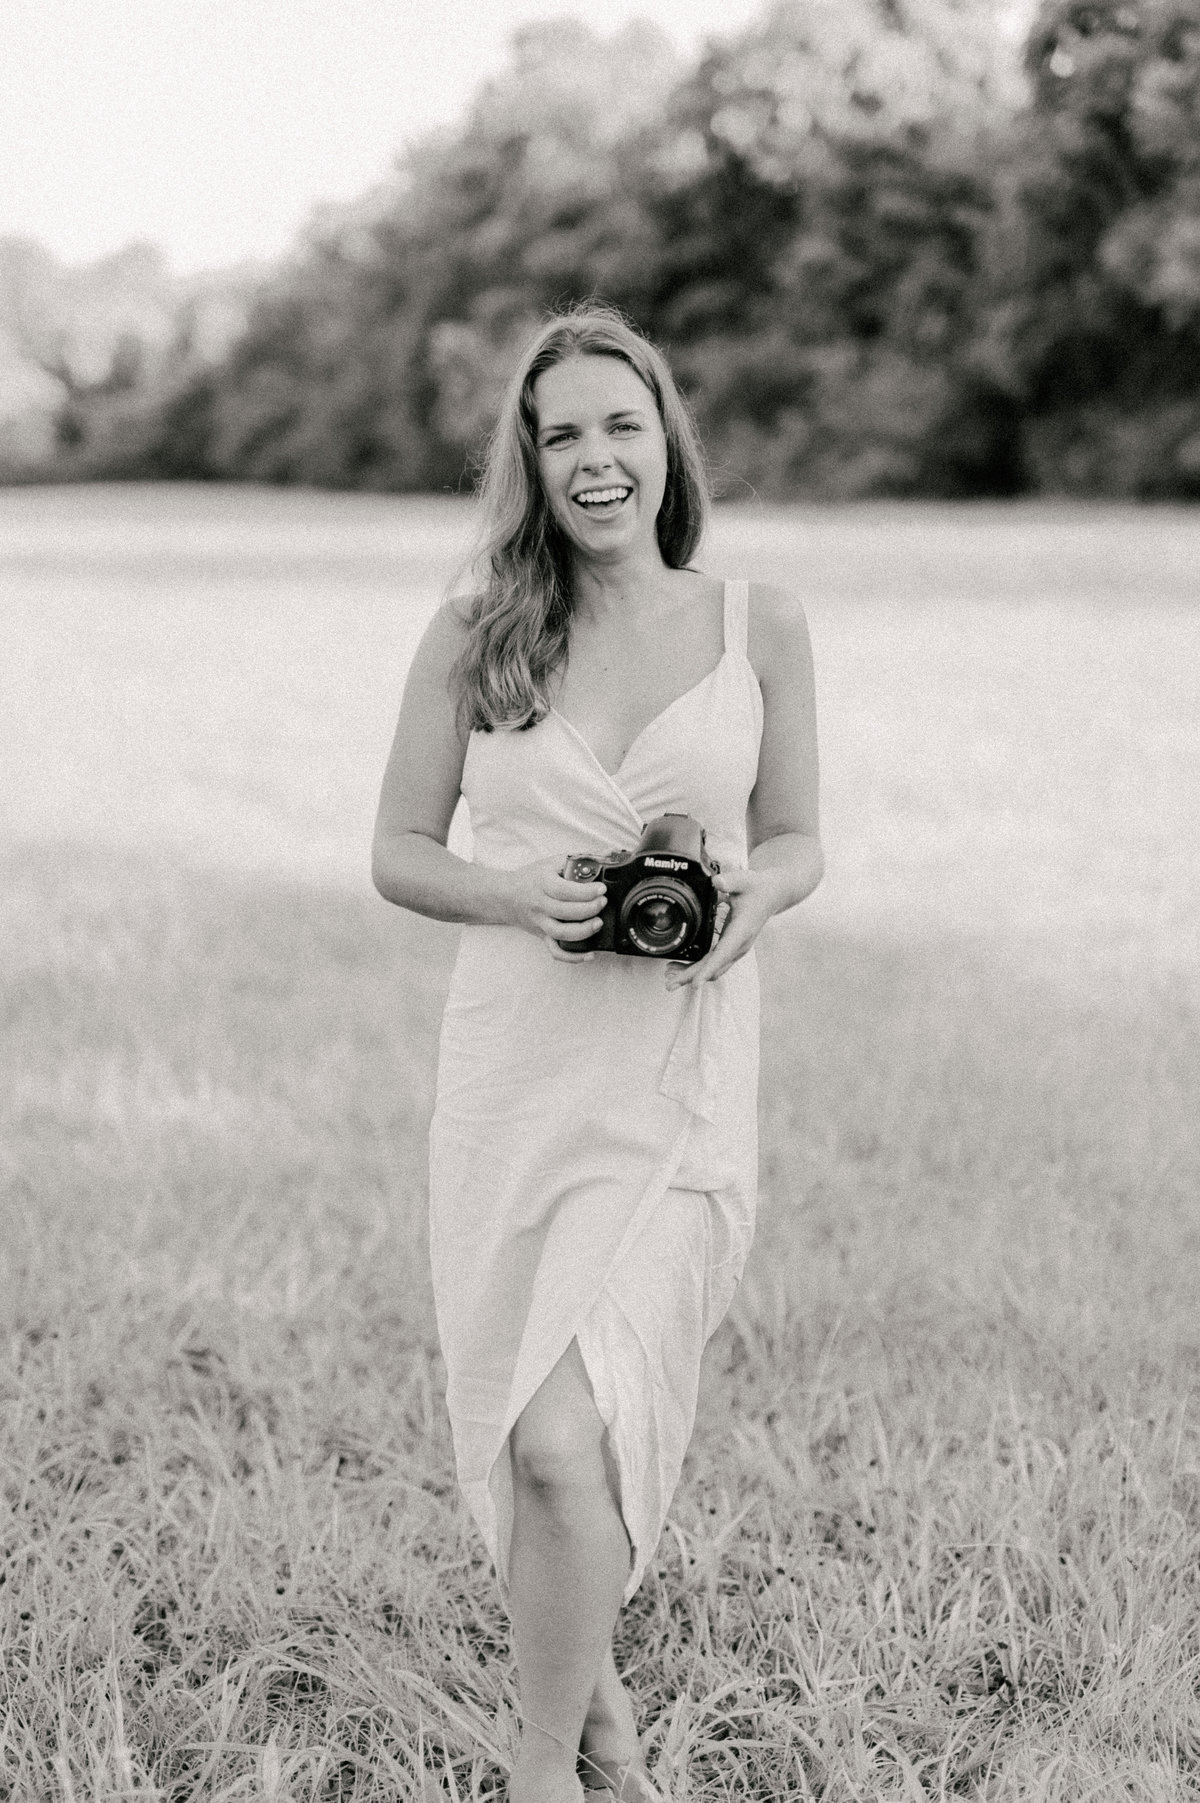 Megan Harris, Owner of Megan Harris Photography